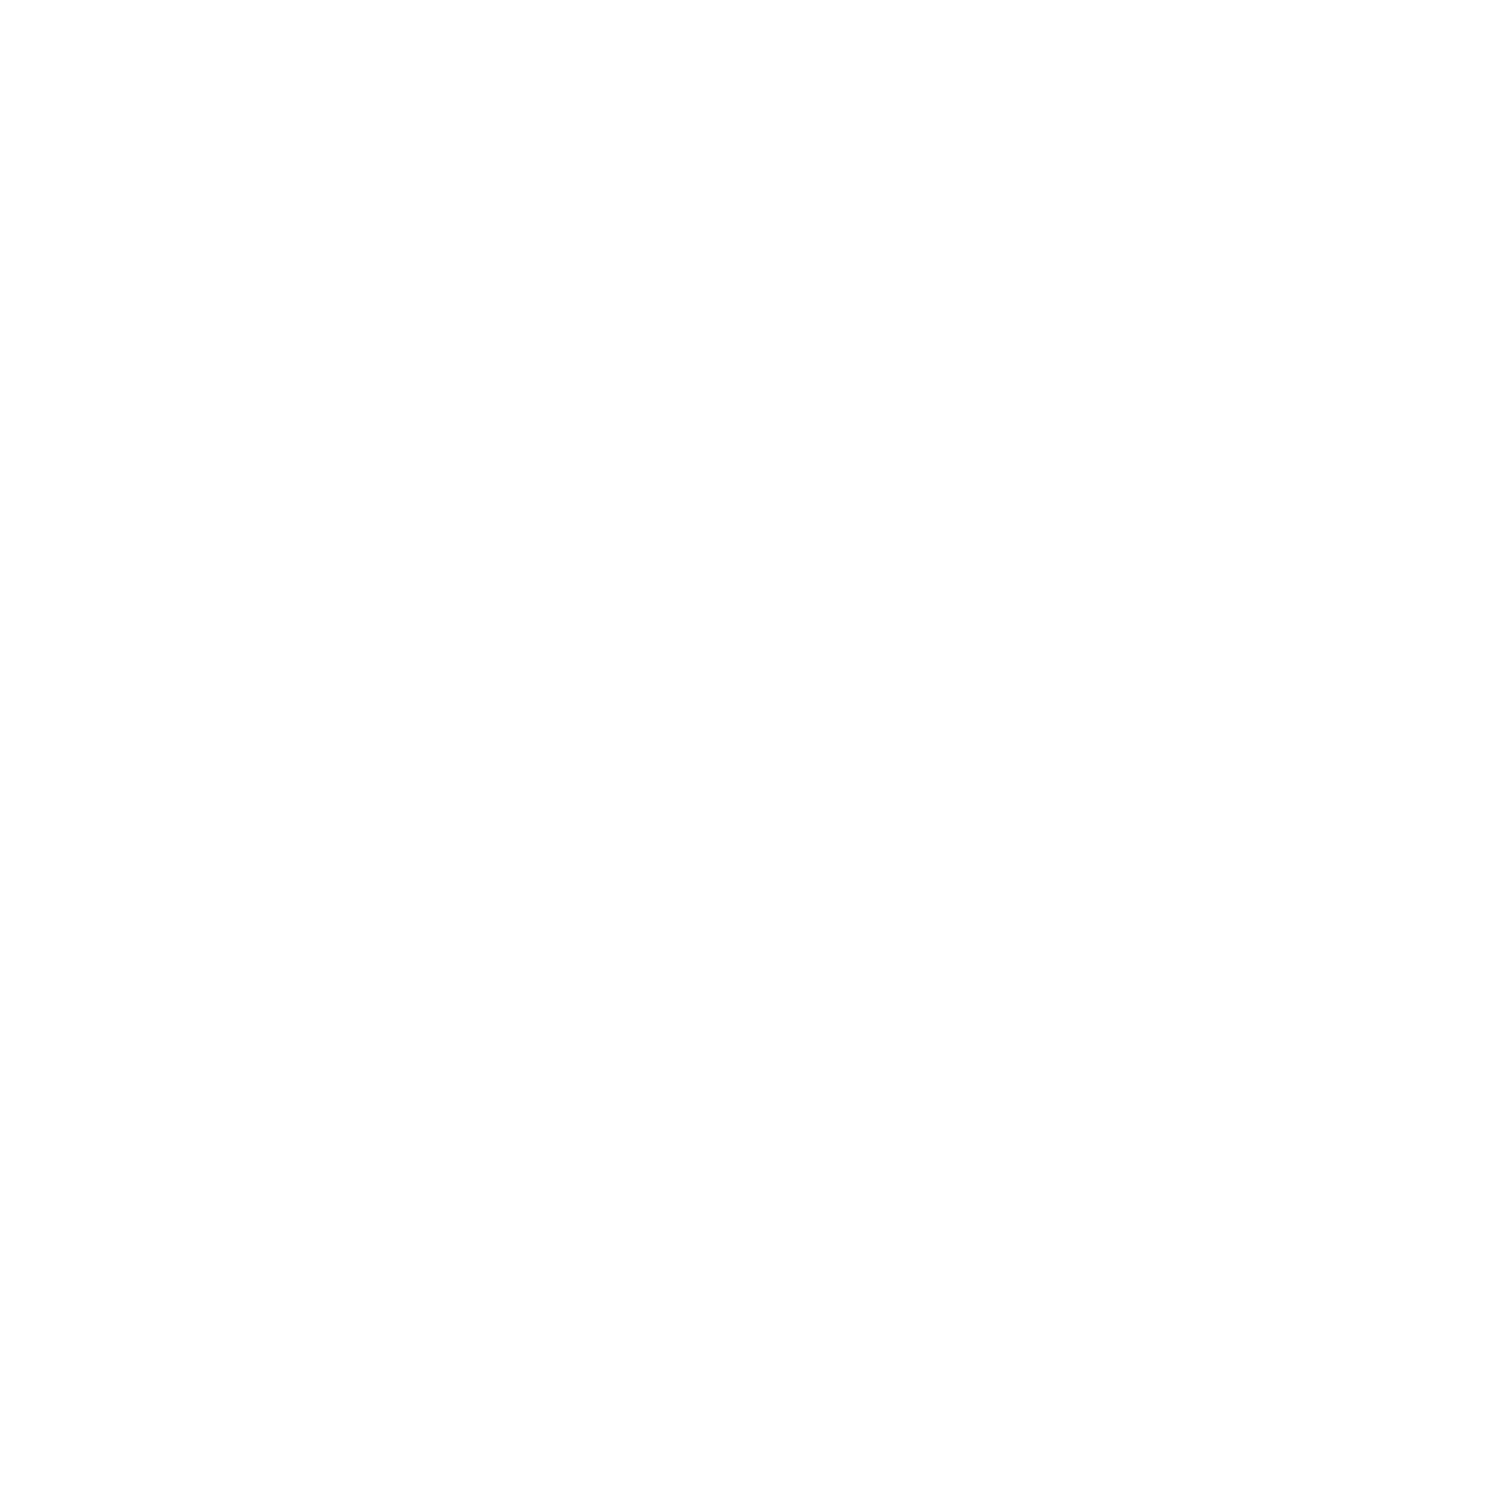 Western Victoria Football Academy